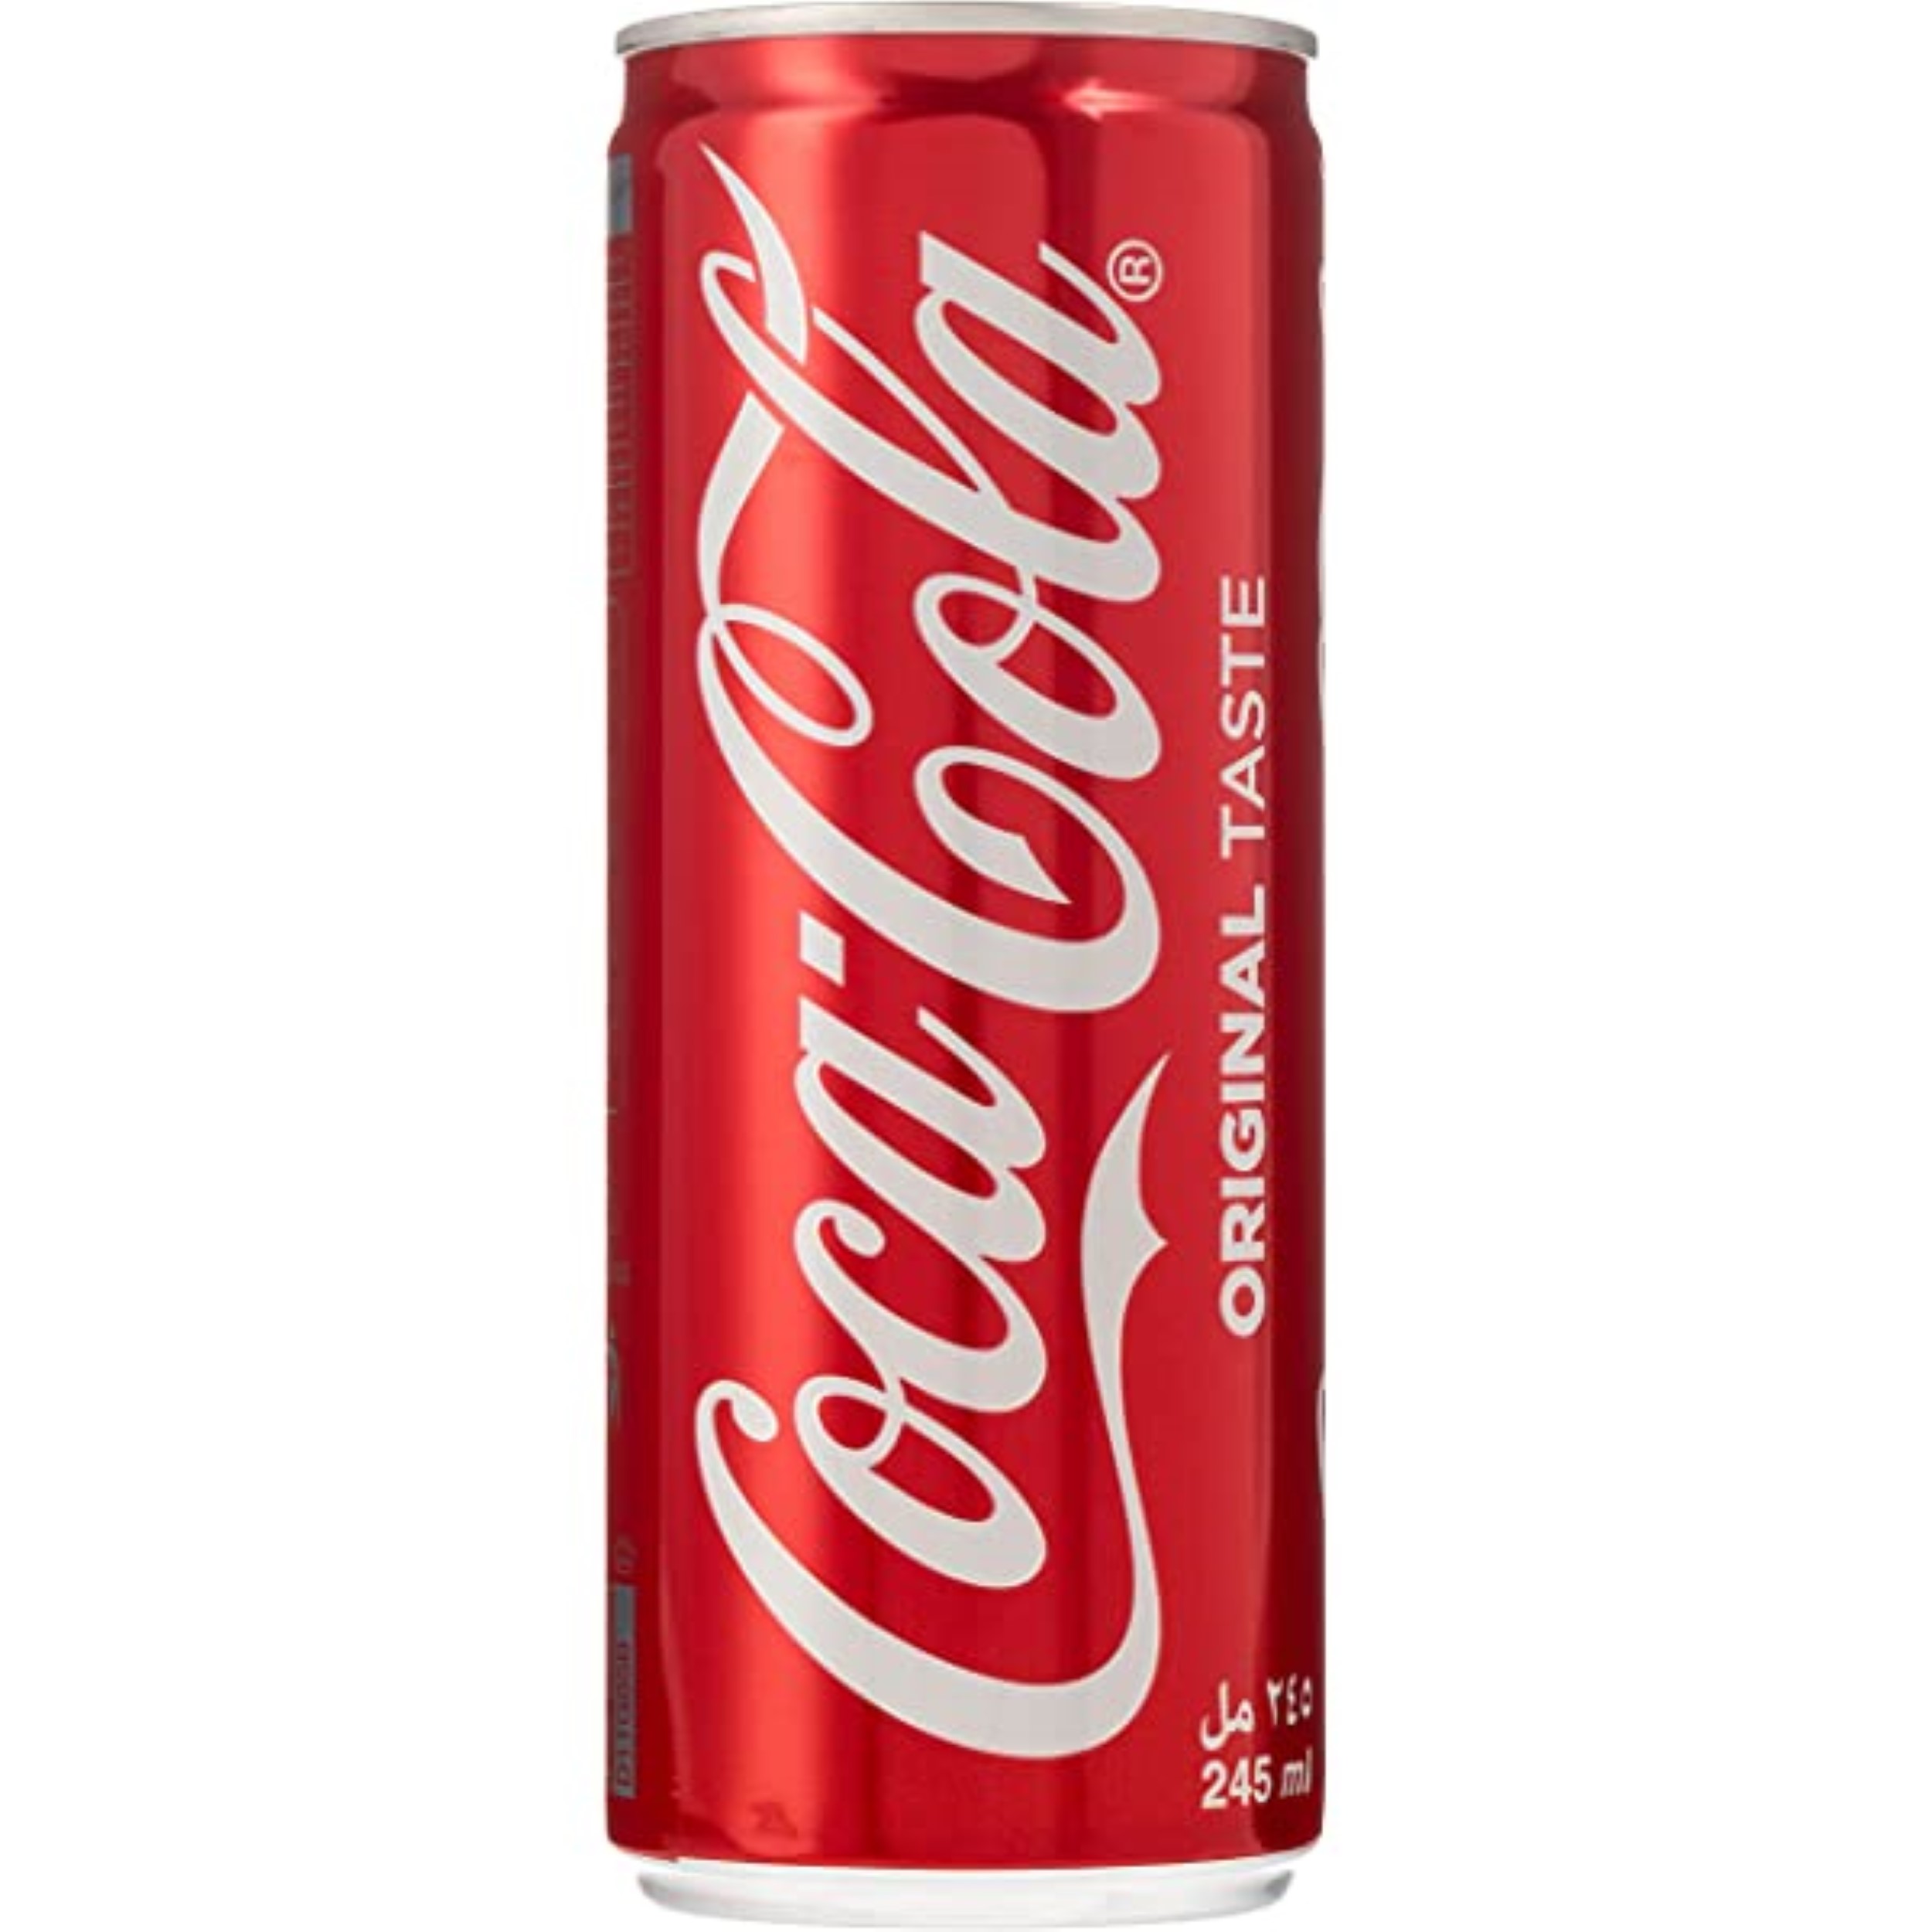 Coca-Cola Brazil Drink a Coke Cue Rack